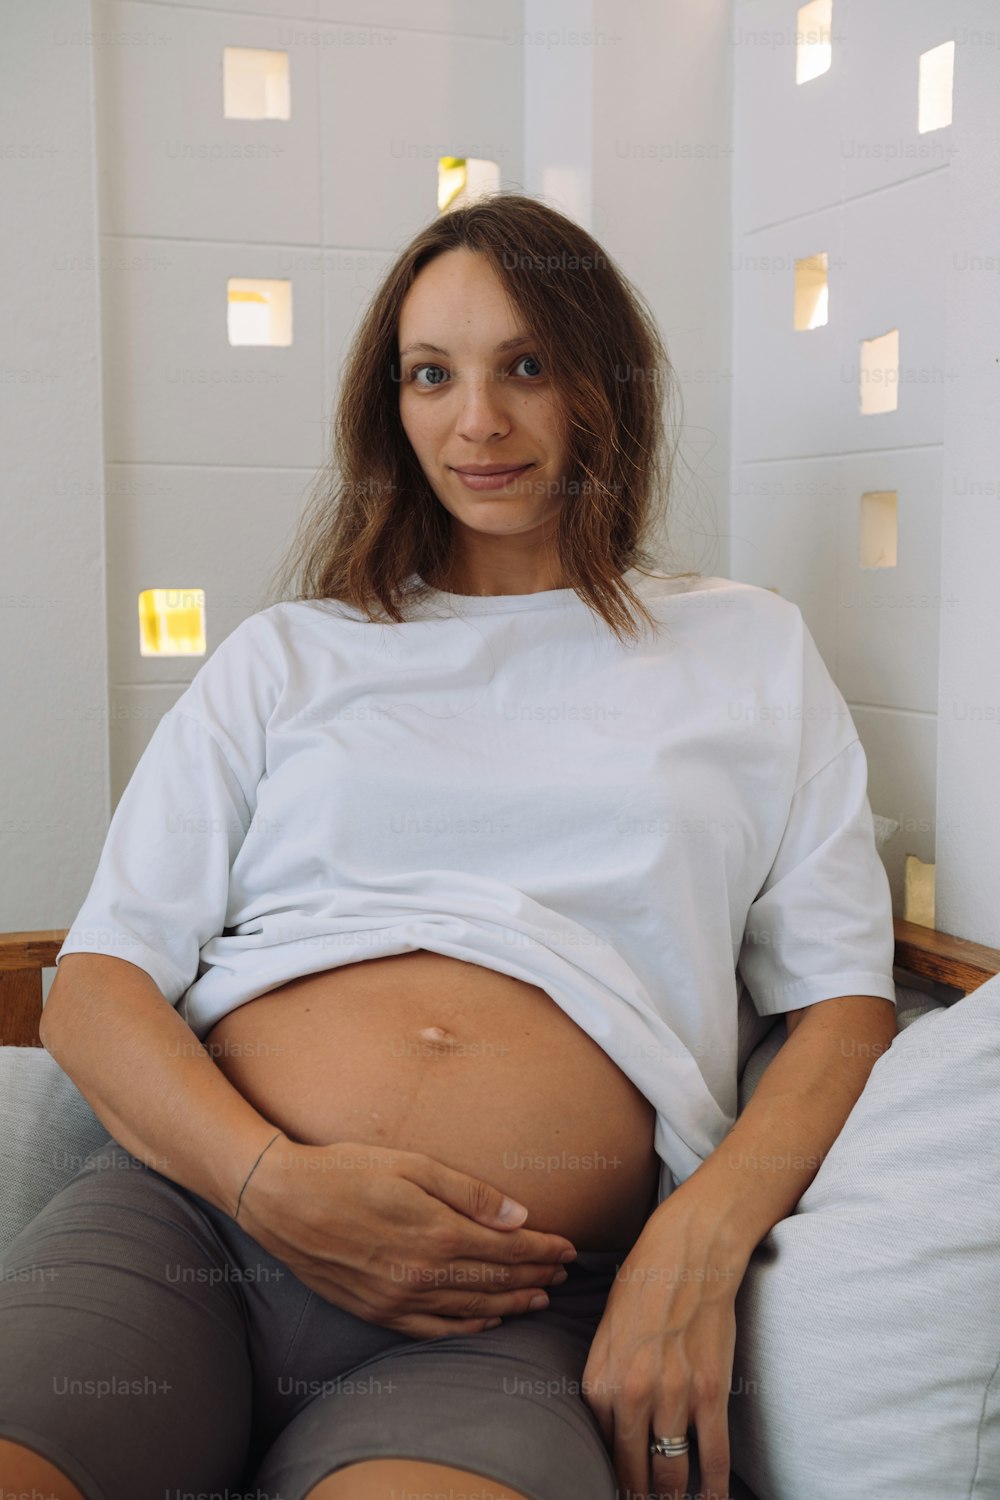 Una donna incinta è seduta su un divano